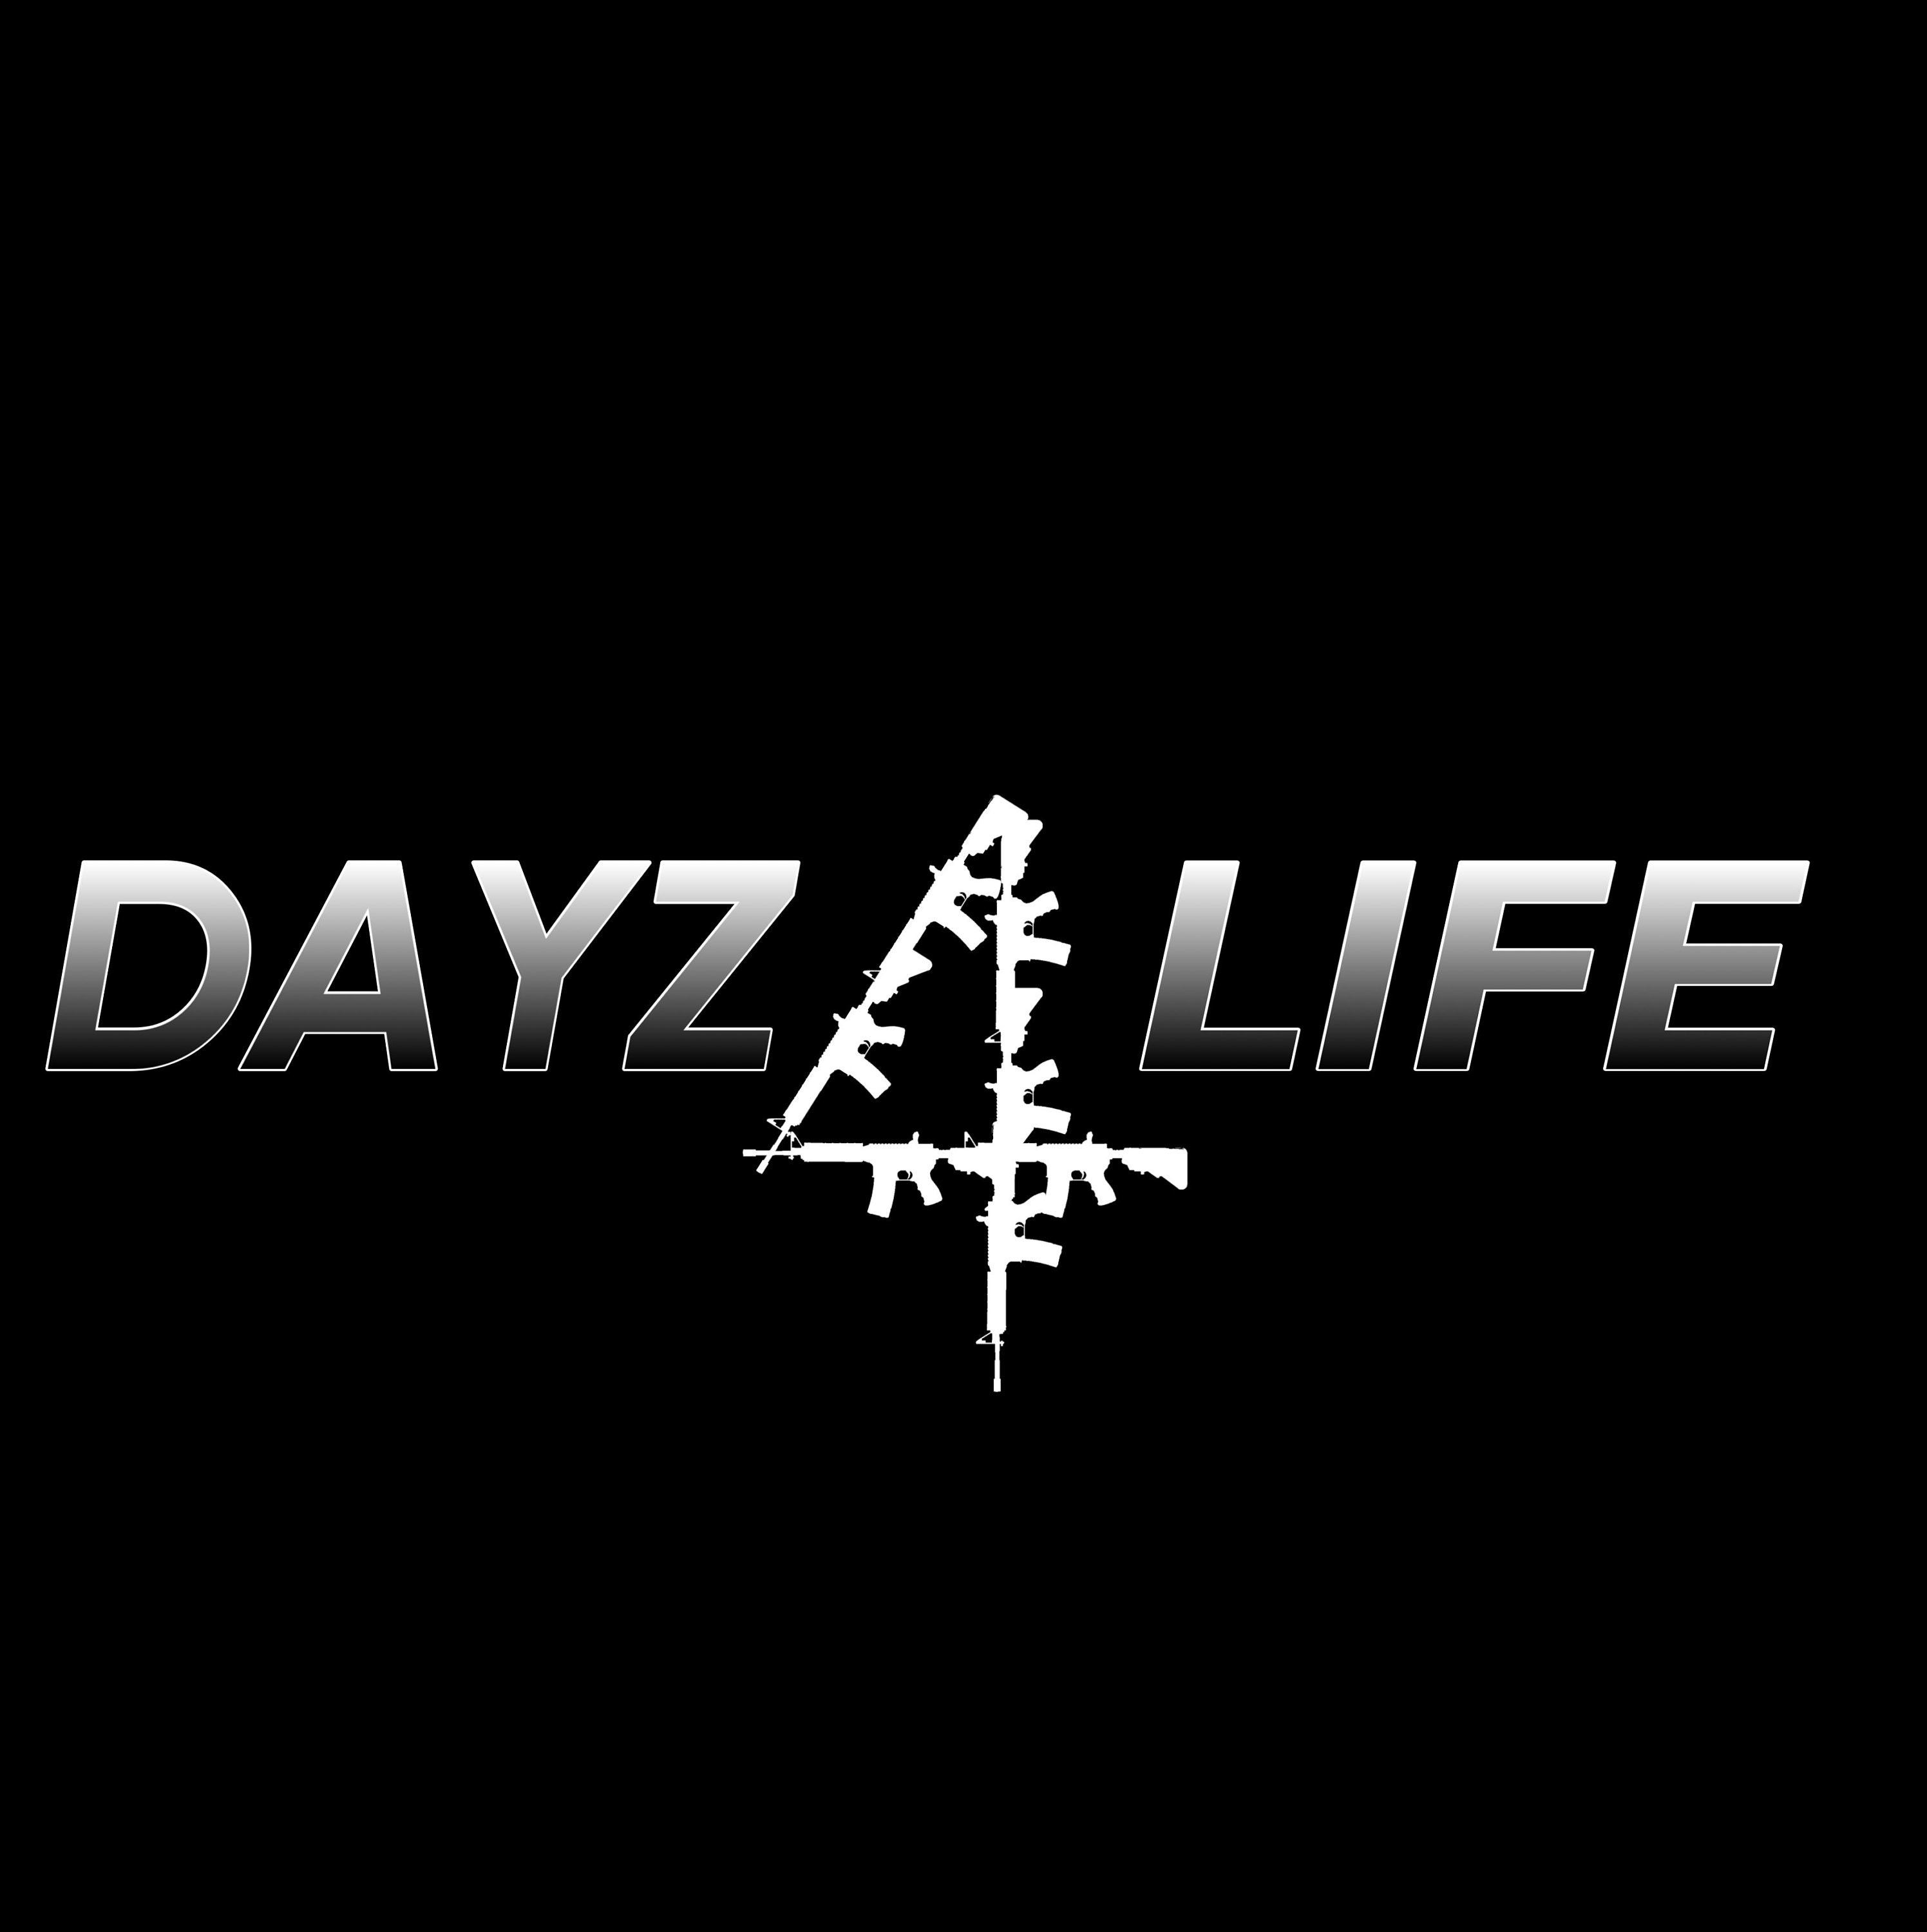 DayZ (Chaves de jogos) for free!